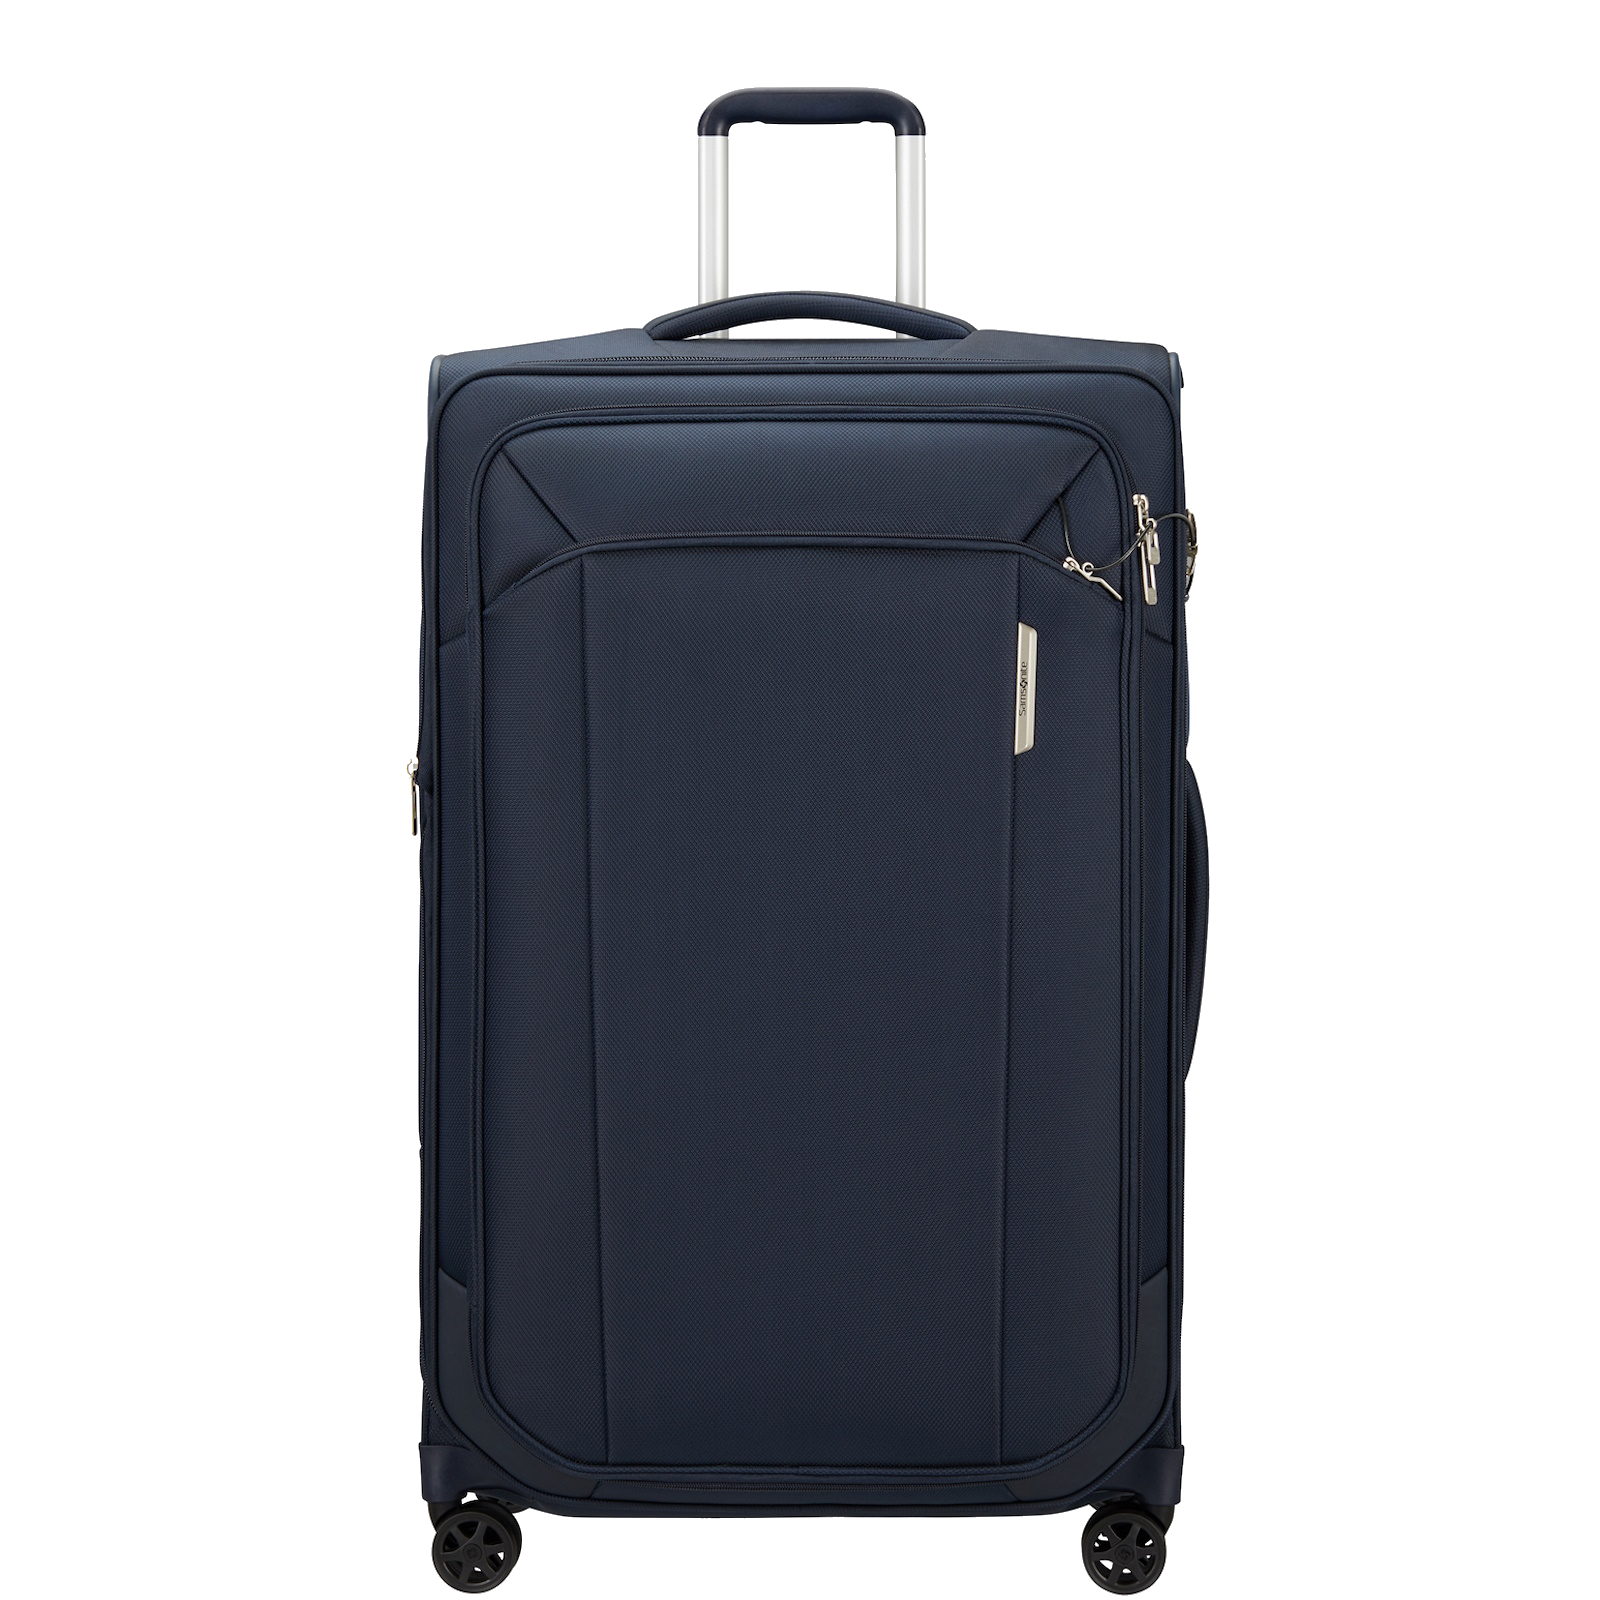 
Samsonite Respark 79cm Expandable Suitcase Midnight Blue